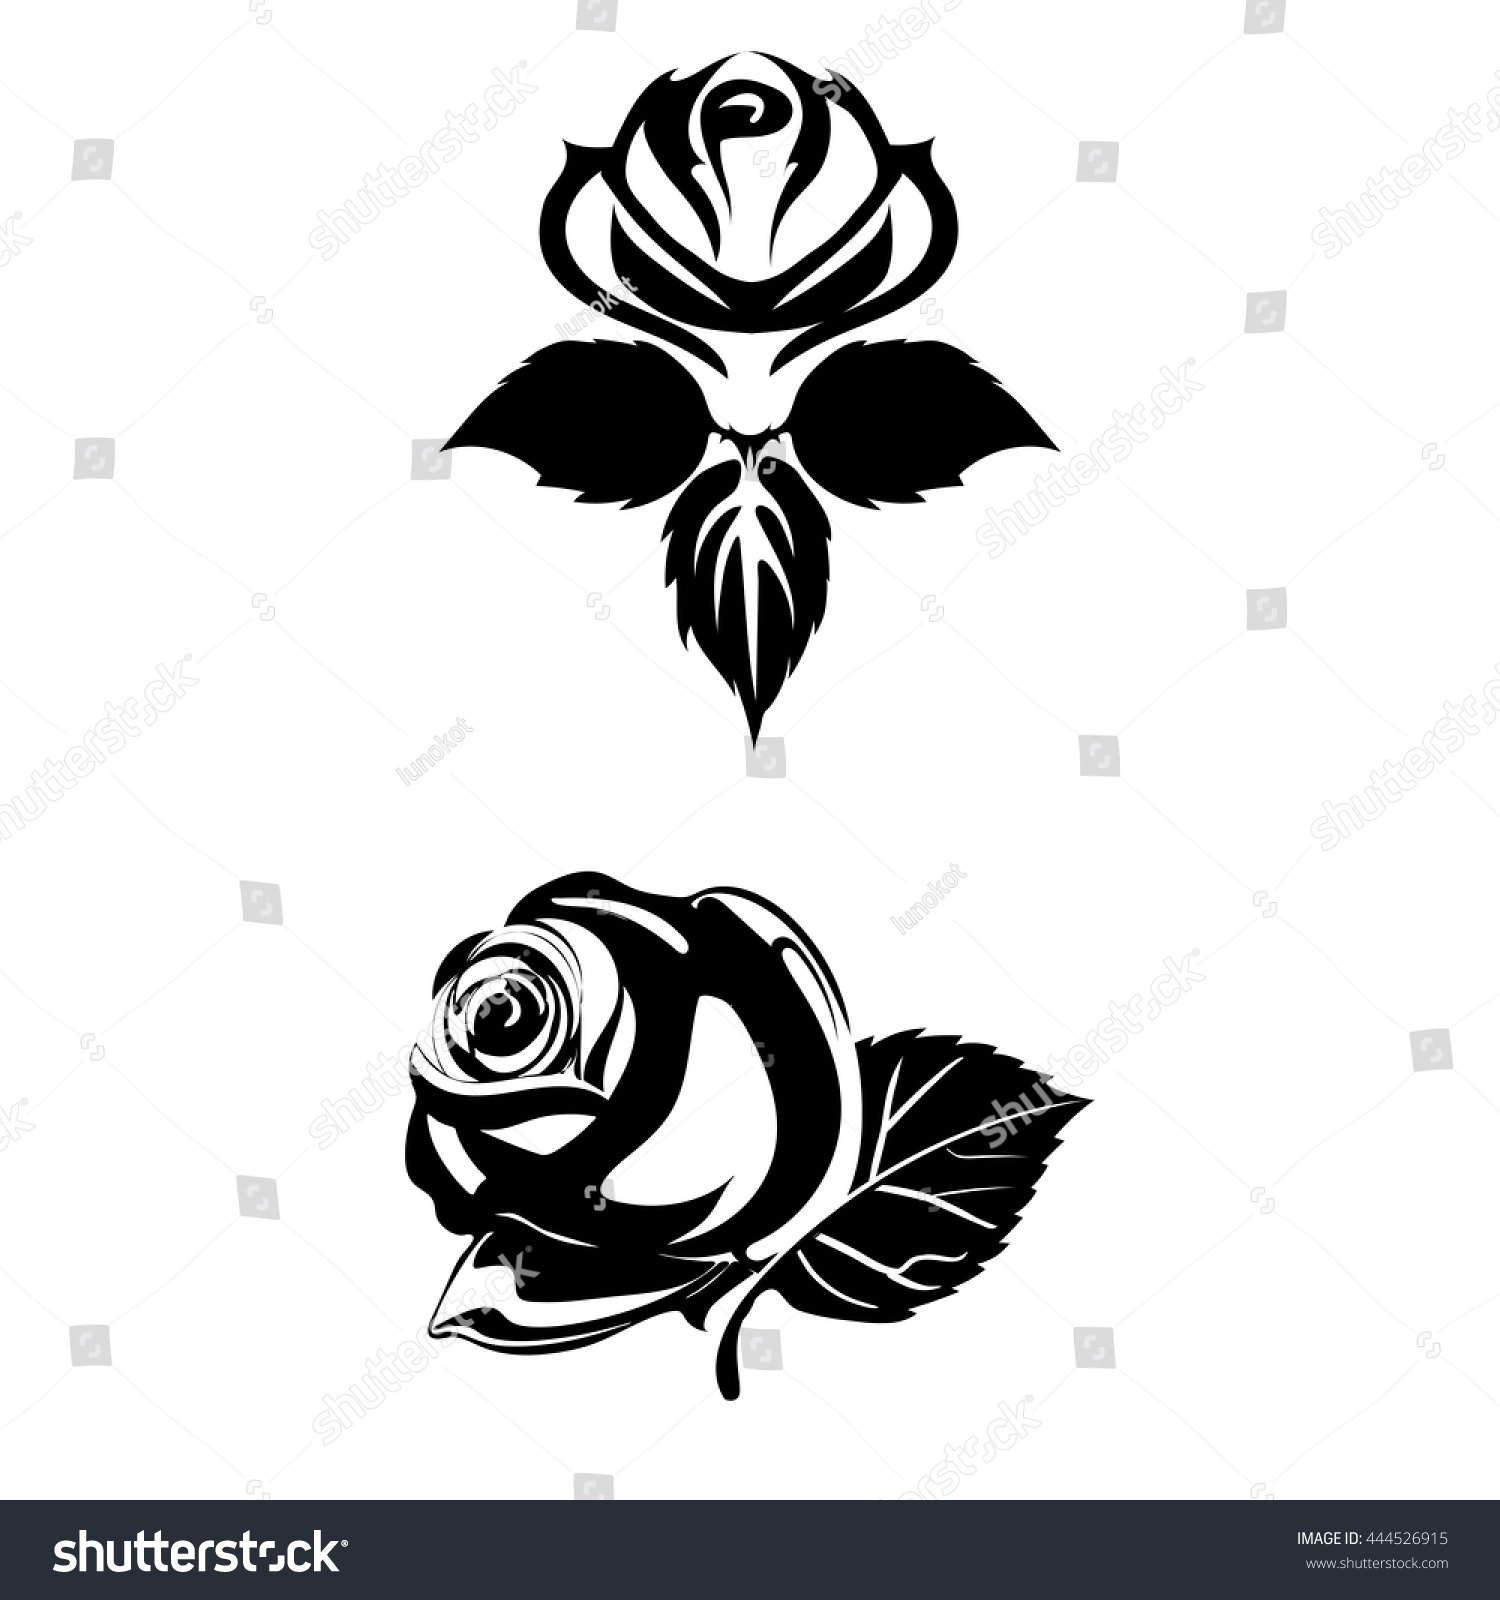 Rose Tattoo Stencil Design Element Black Stock Vector (Royalty Free ...